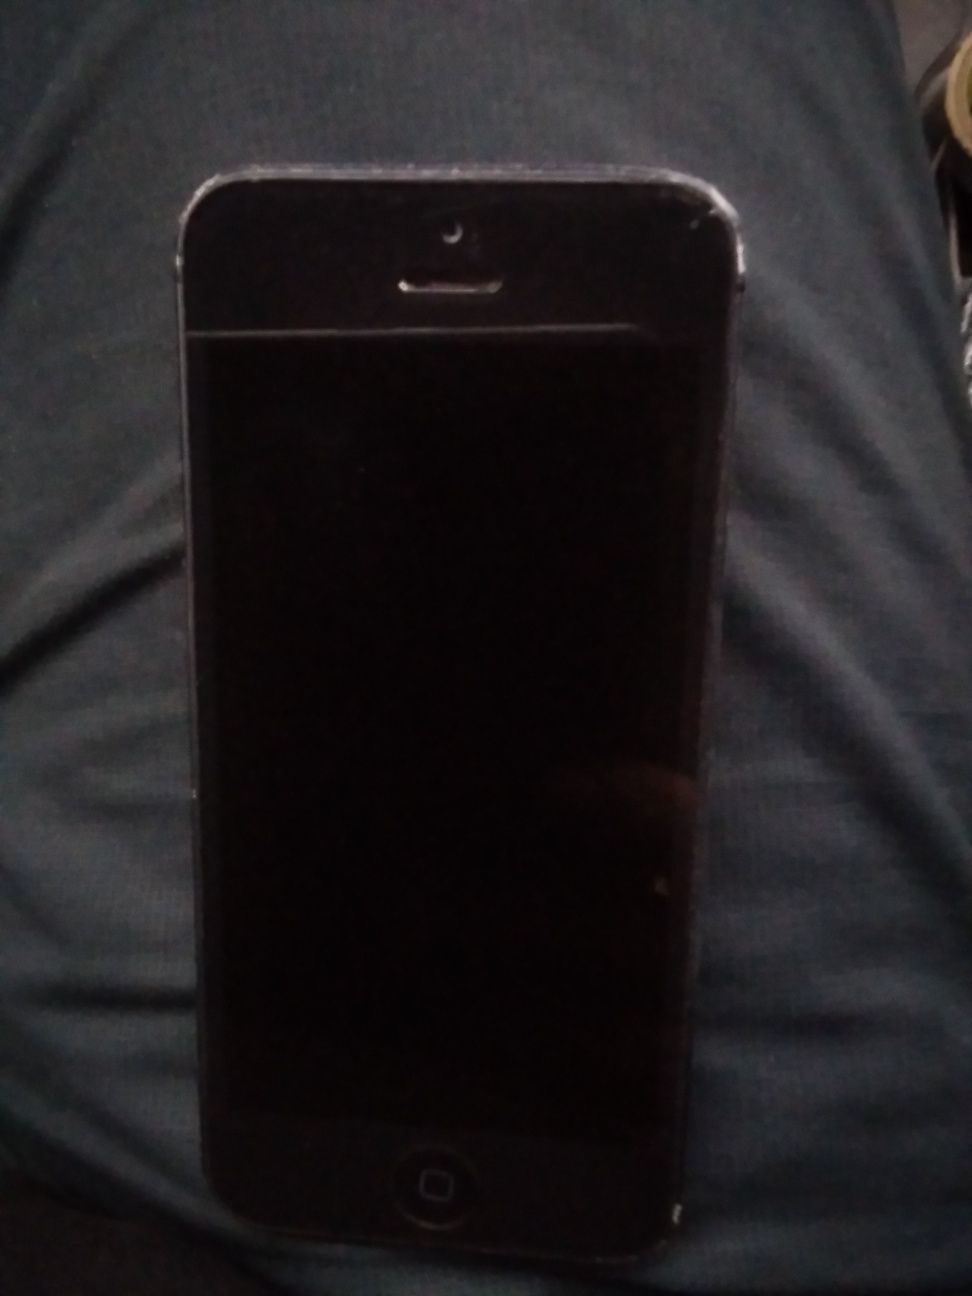 Iphone 5 (A1429) - Айфон 5